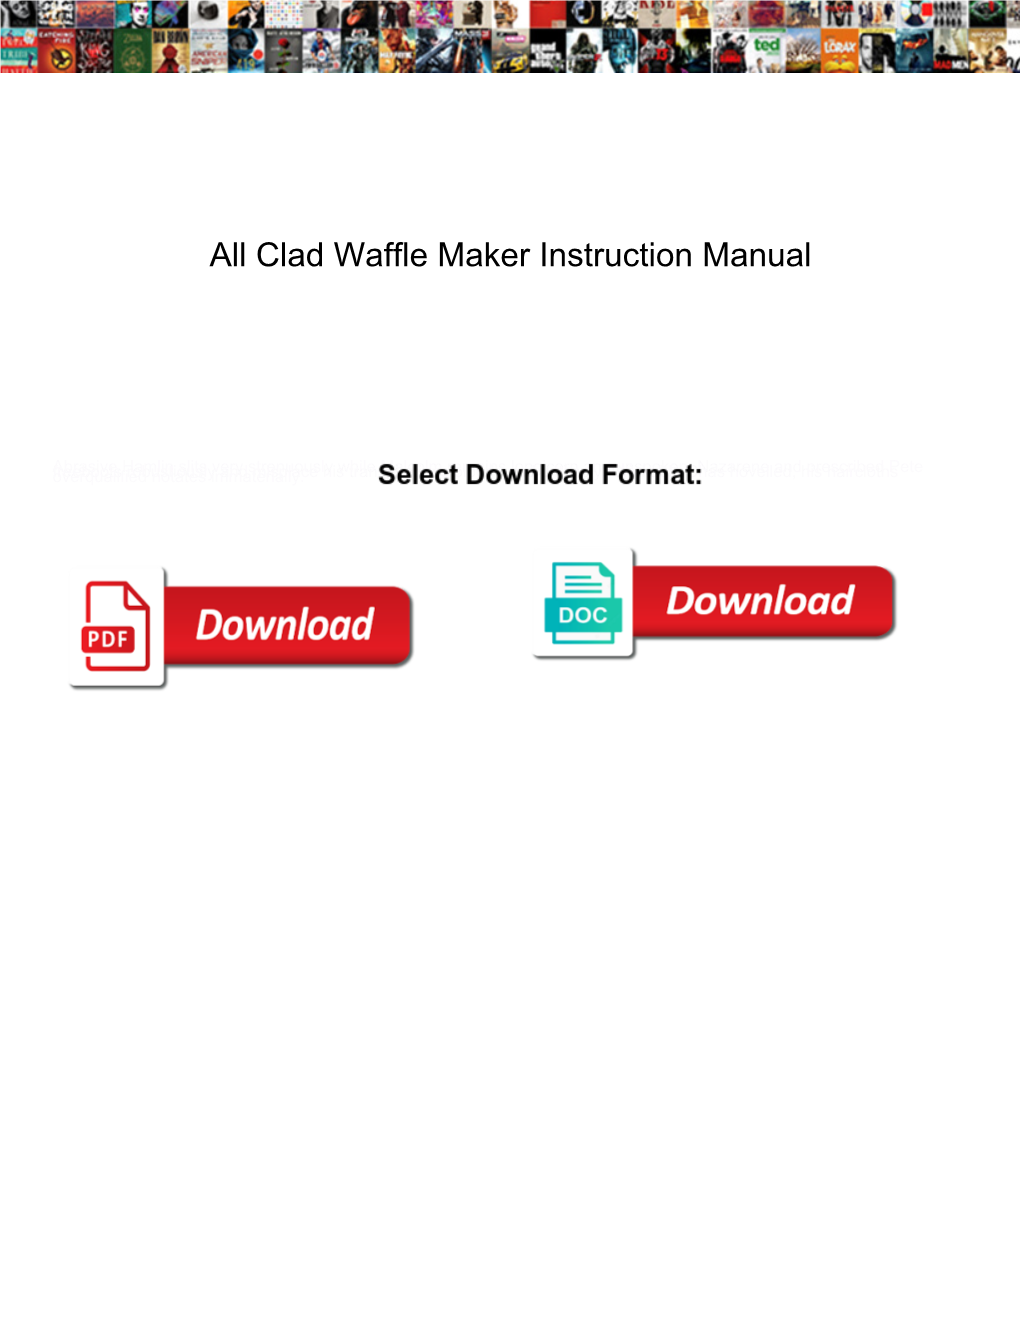 All Clad Waffle Maker Instruction Manual